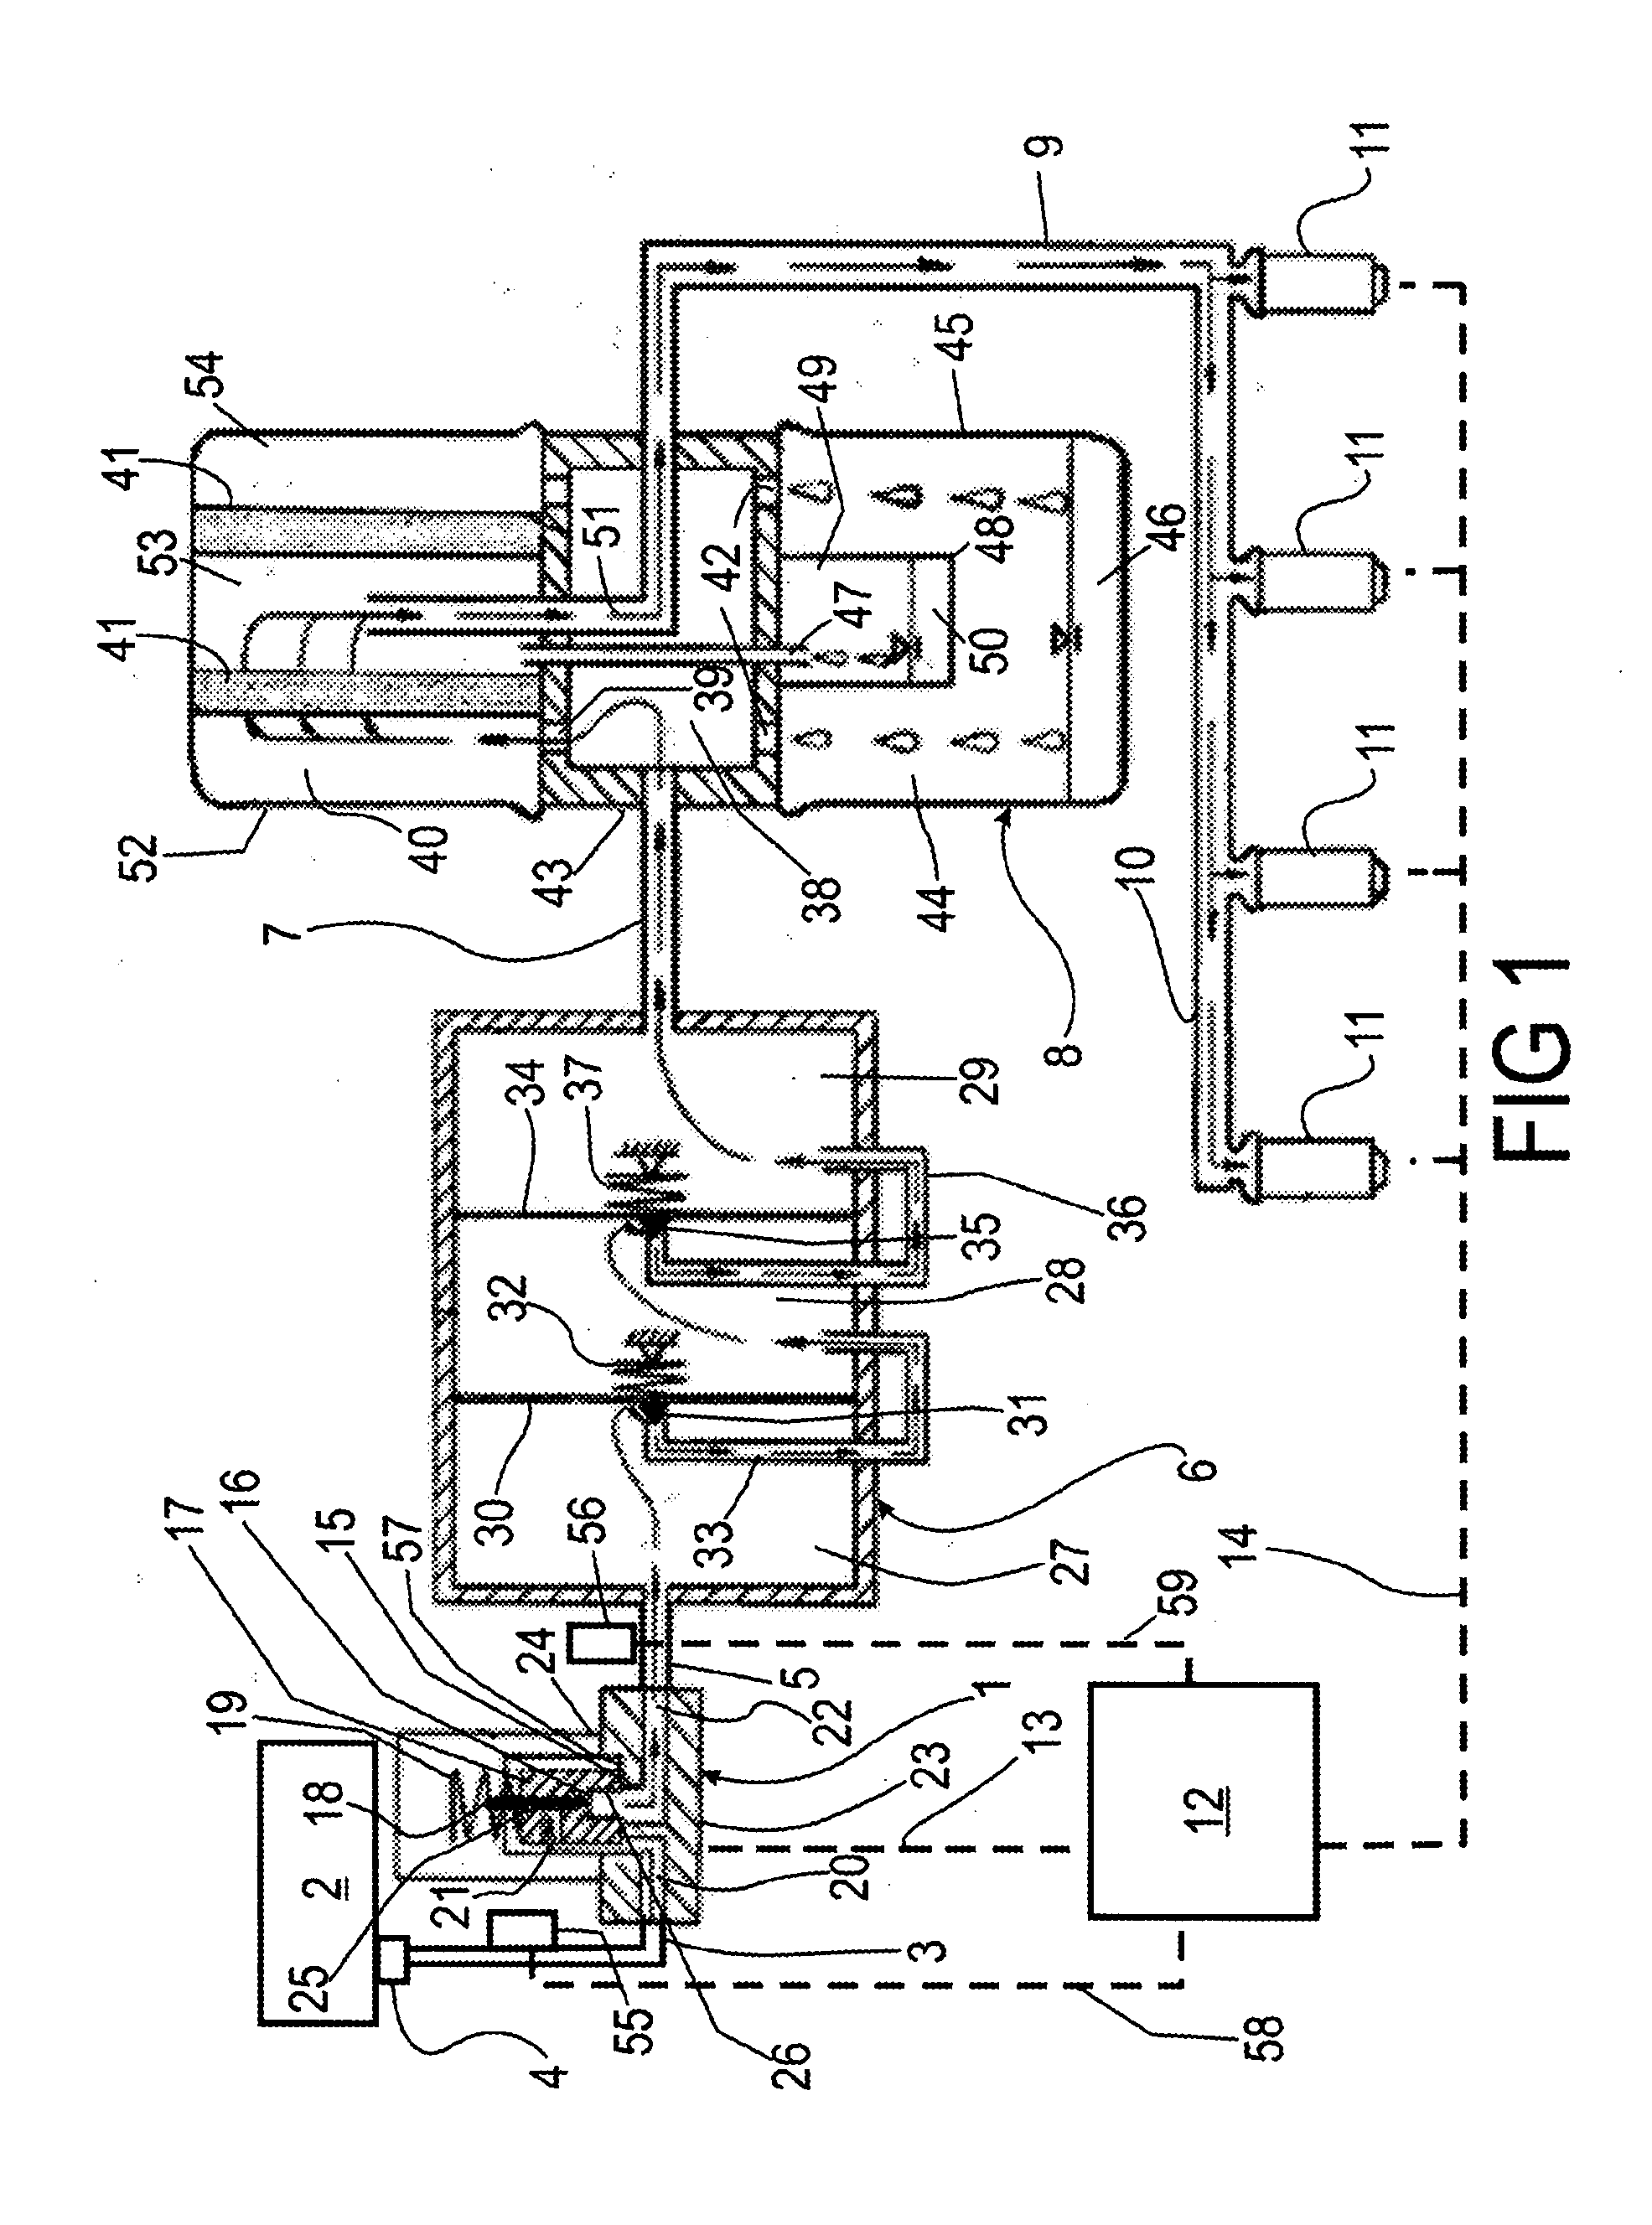 Method of operating an internal combustion engine arrangement